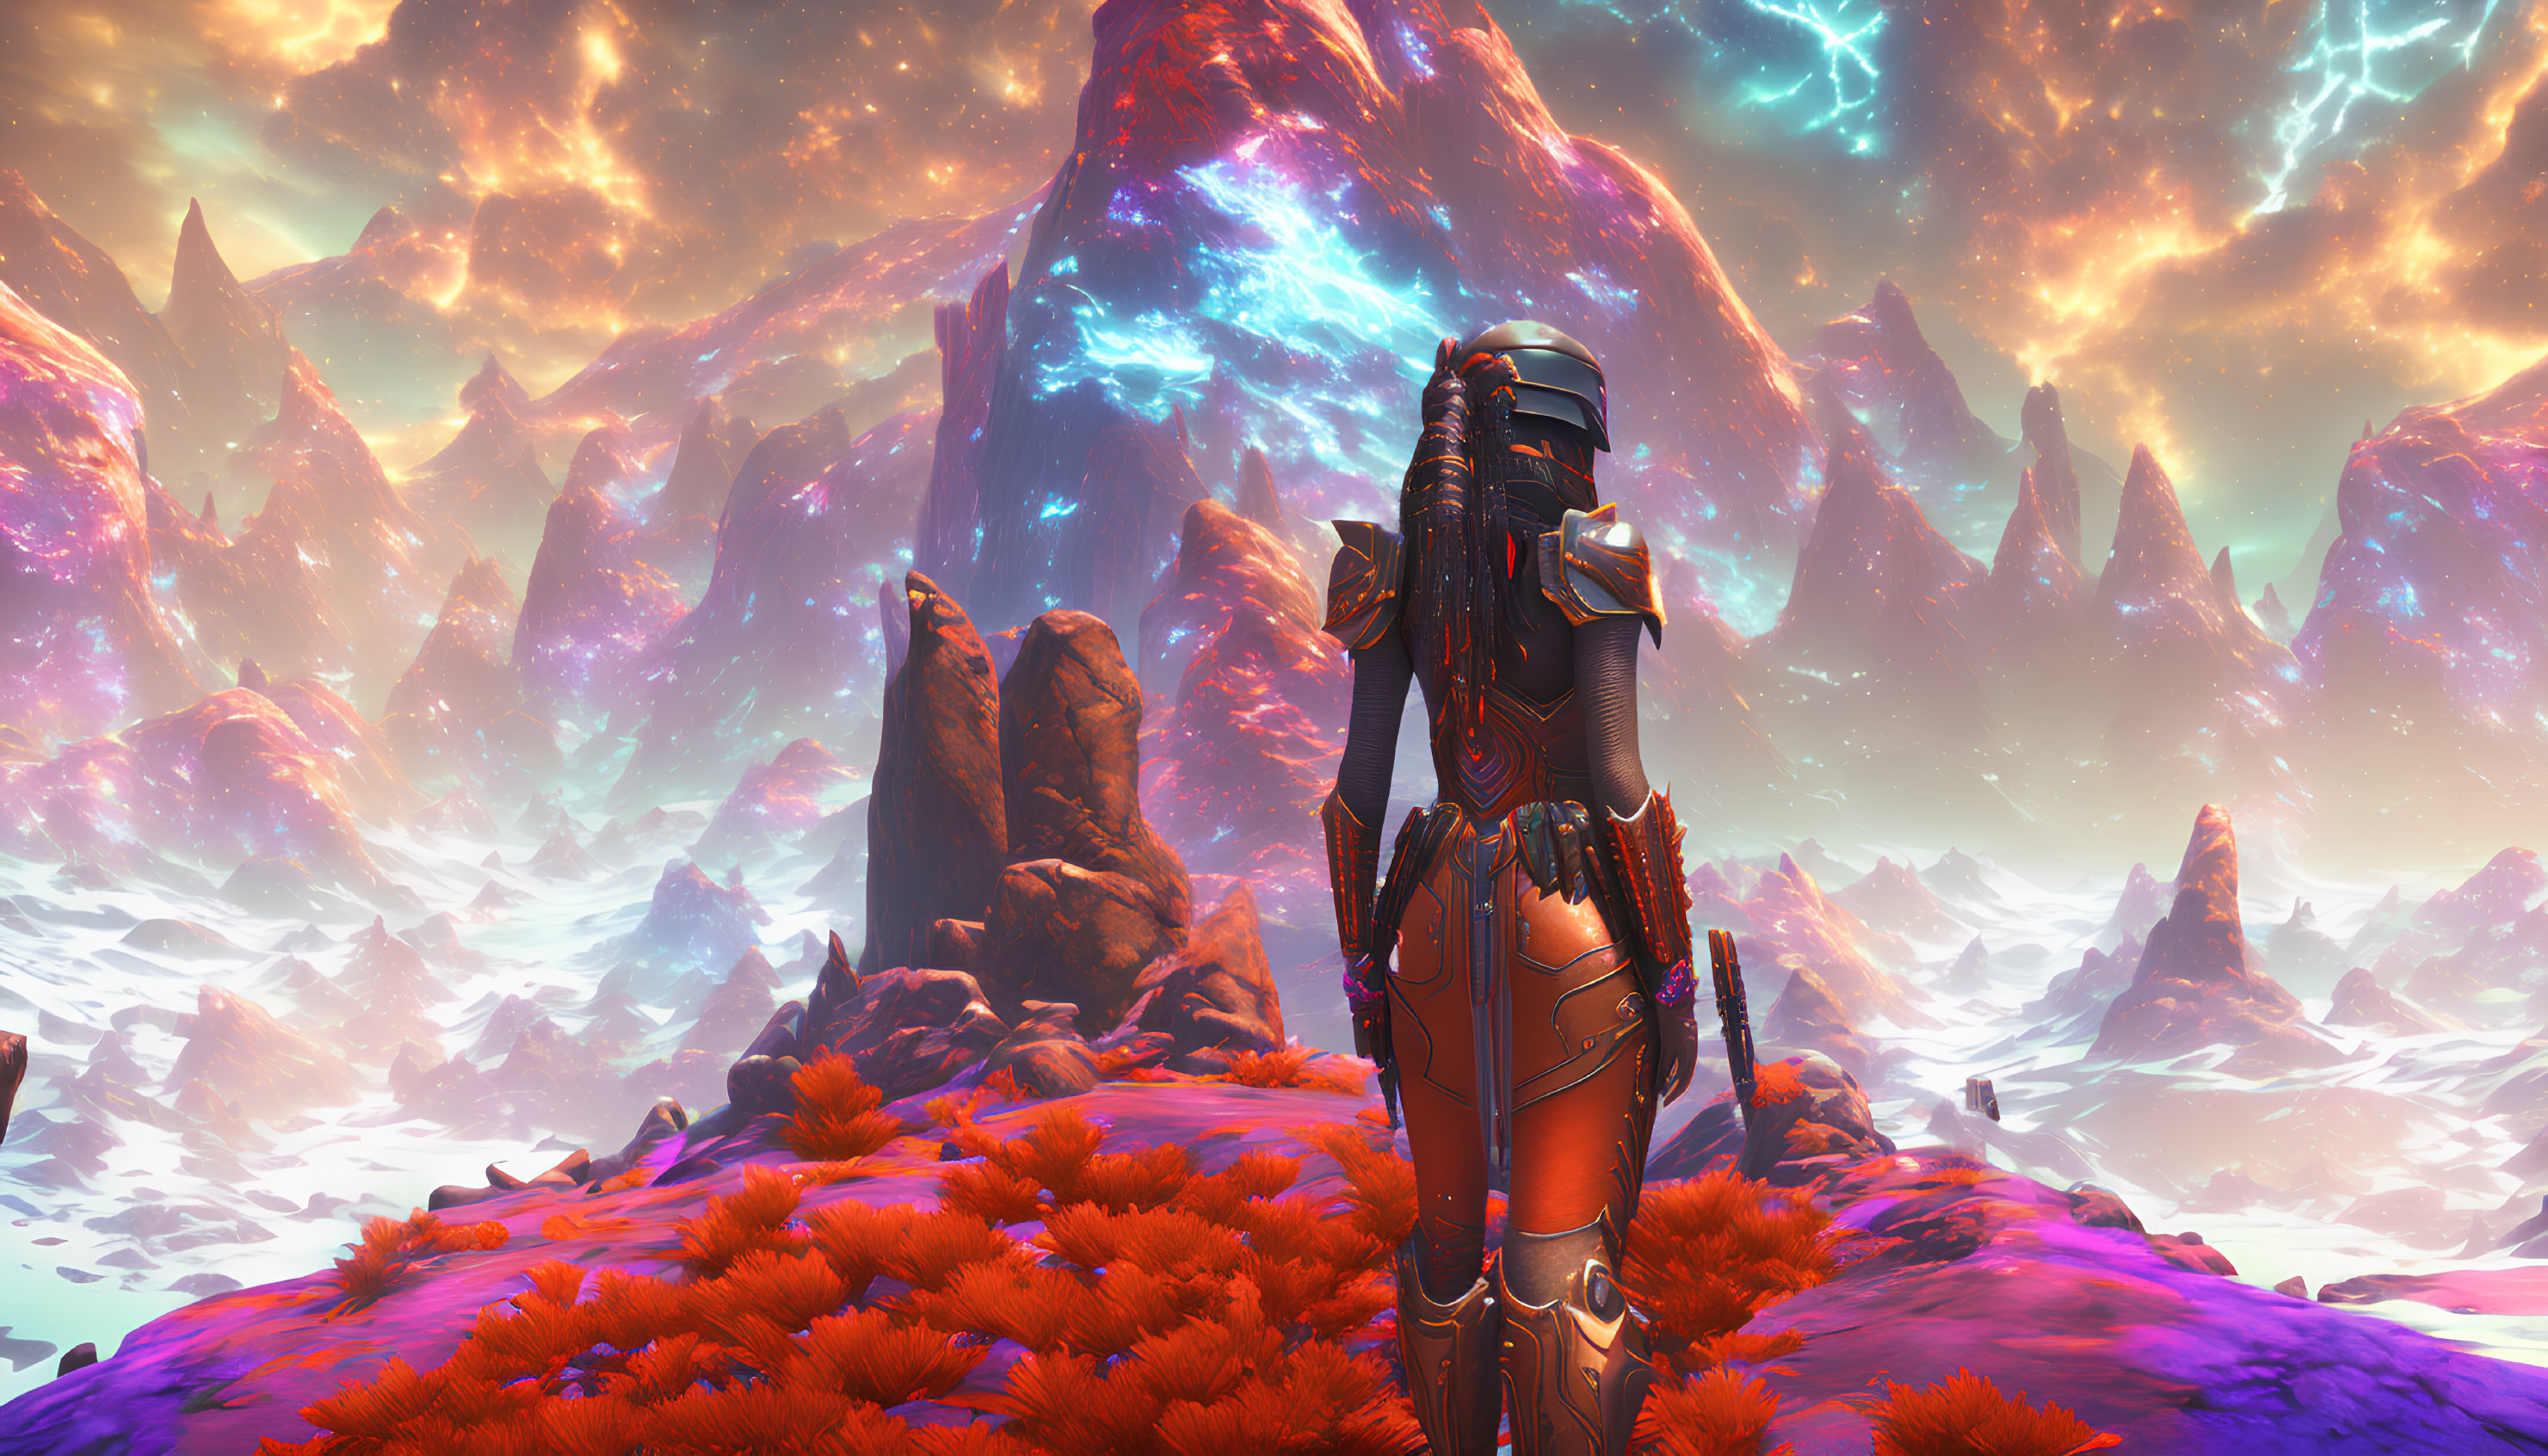 Futuristic armored figure in neon alien landscape with crimson flora